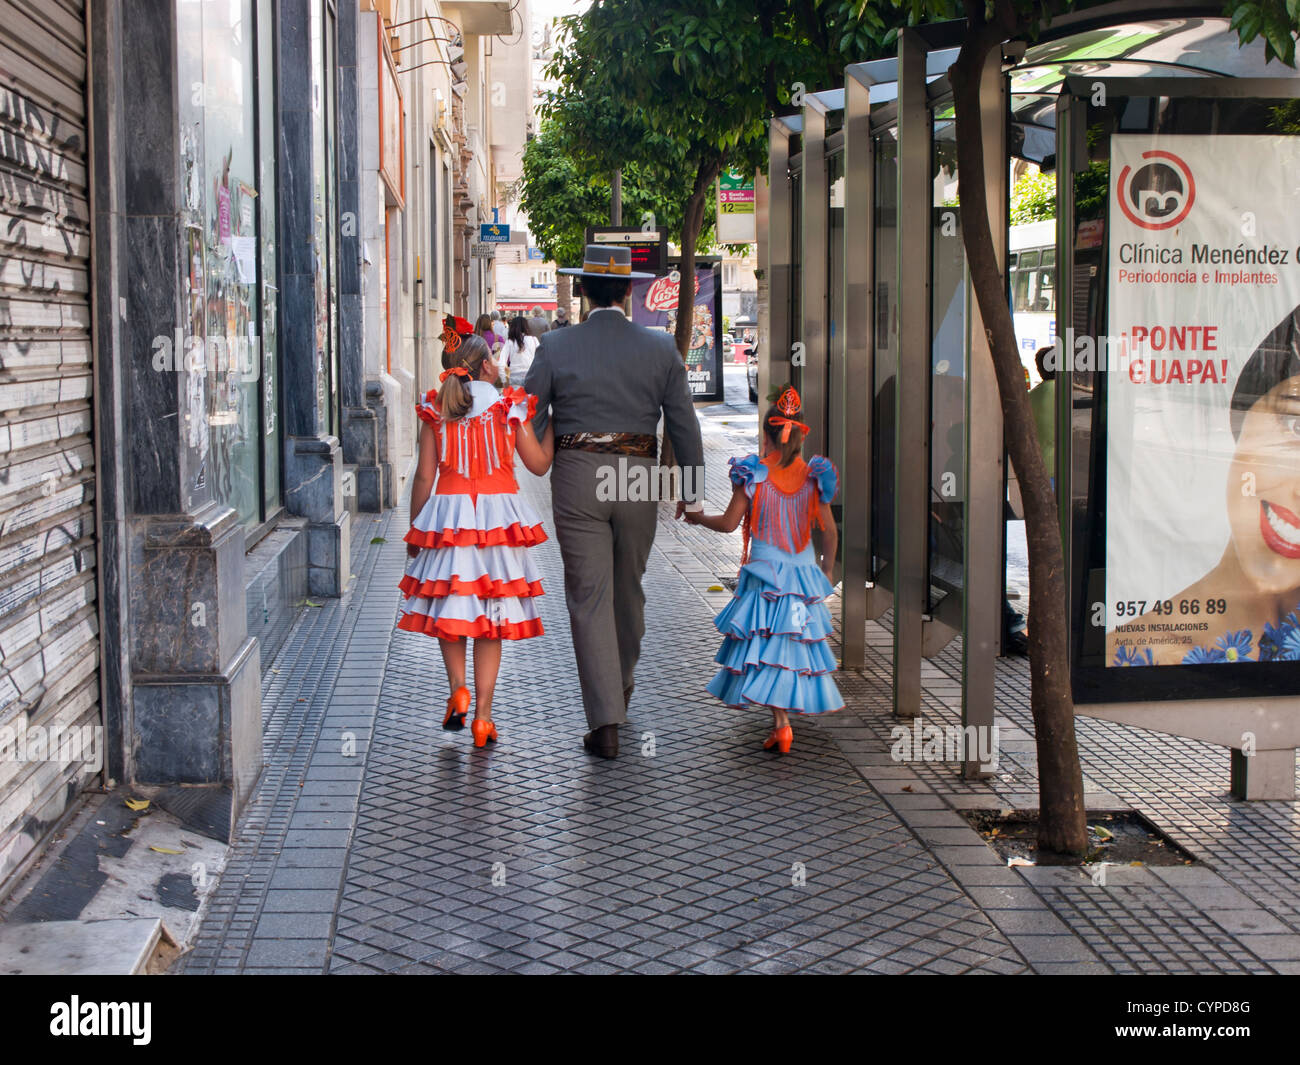 Street scene in Cordoba Andalusia Spain two girls with traditional flamenco dress,Traje de flamenca with man walking Stock Photo